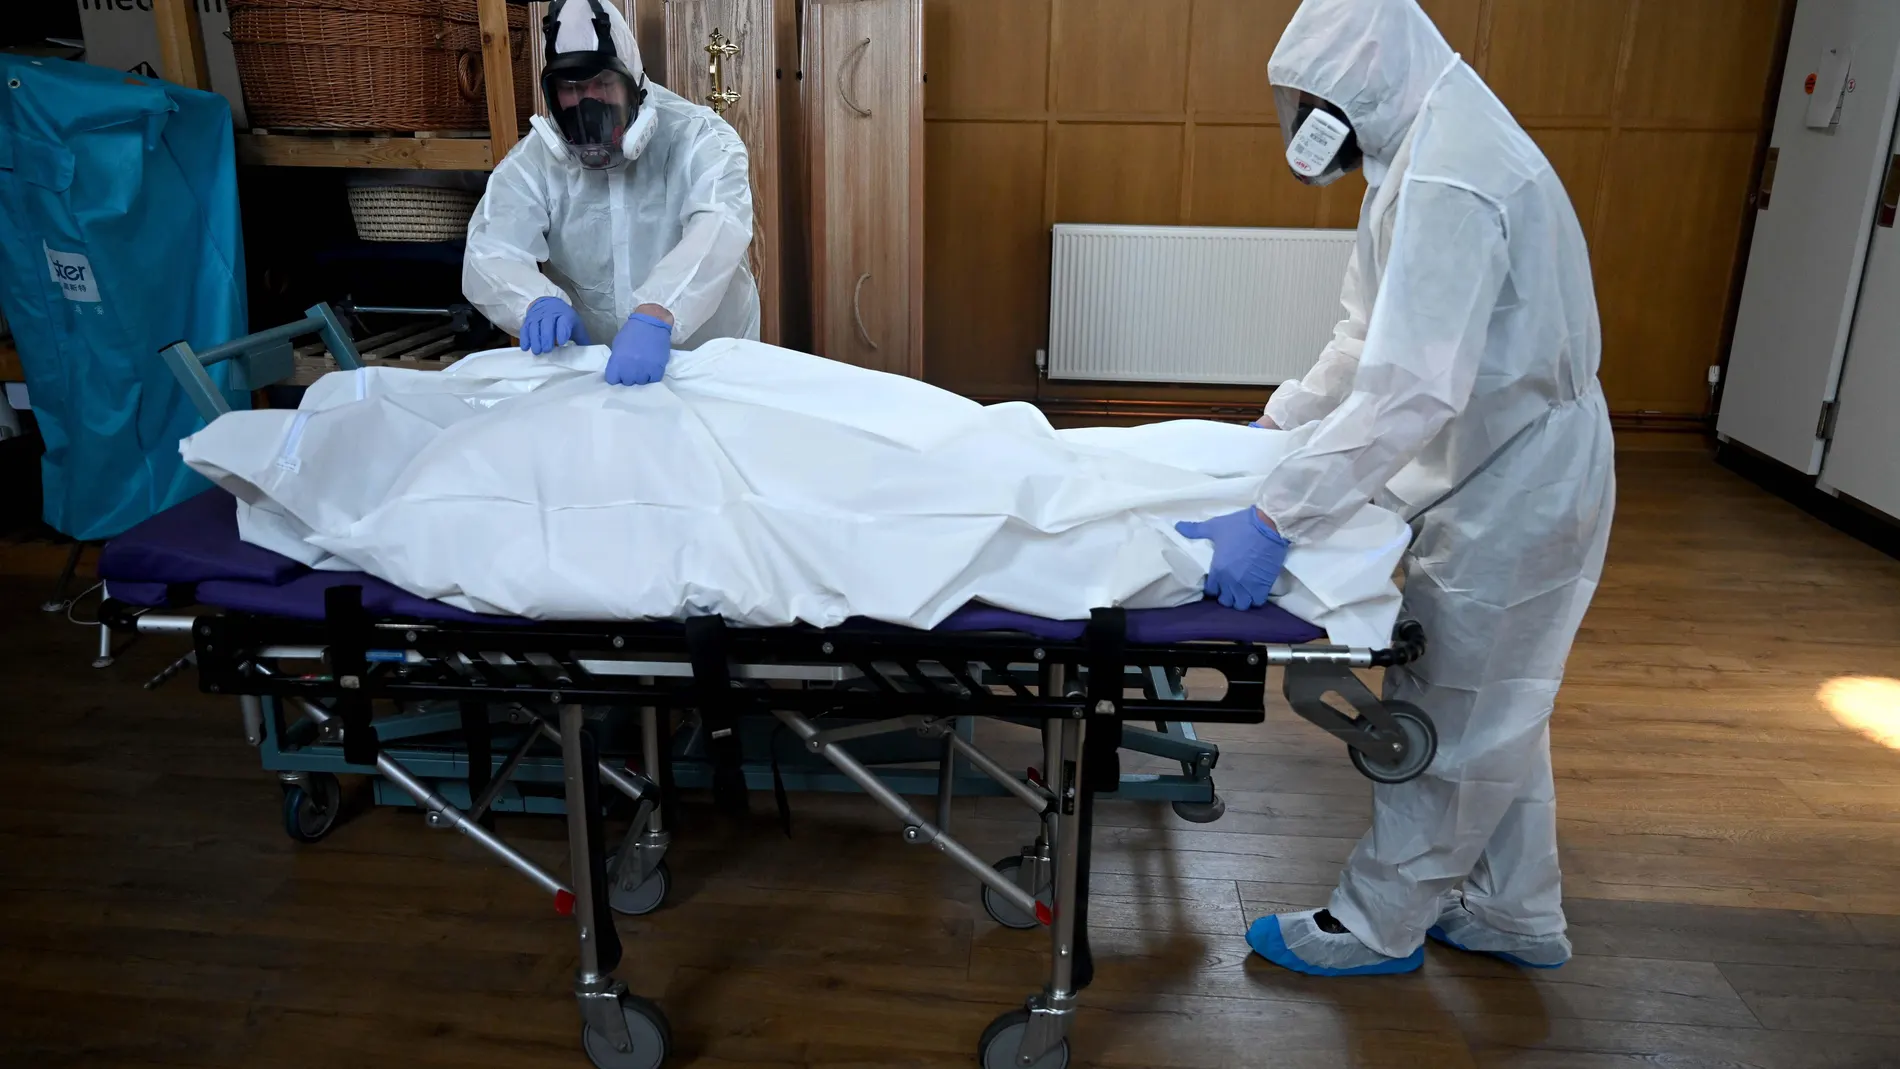 Funeral house amid coronavirus pandemic in London